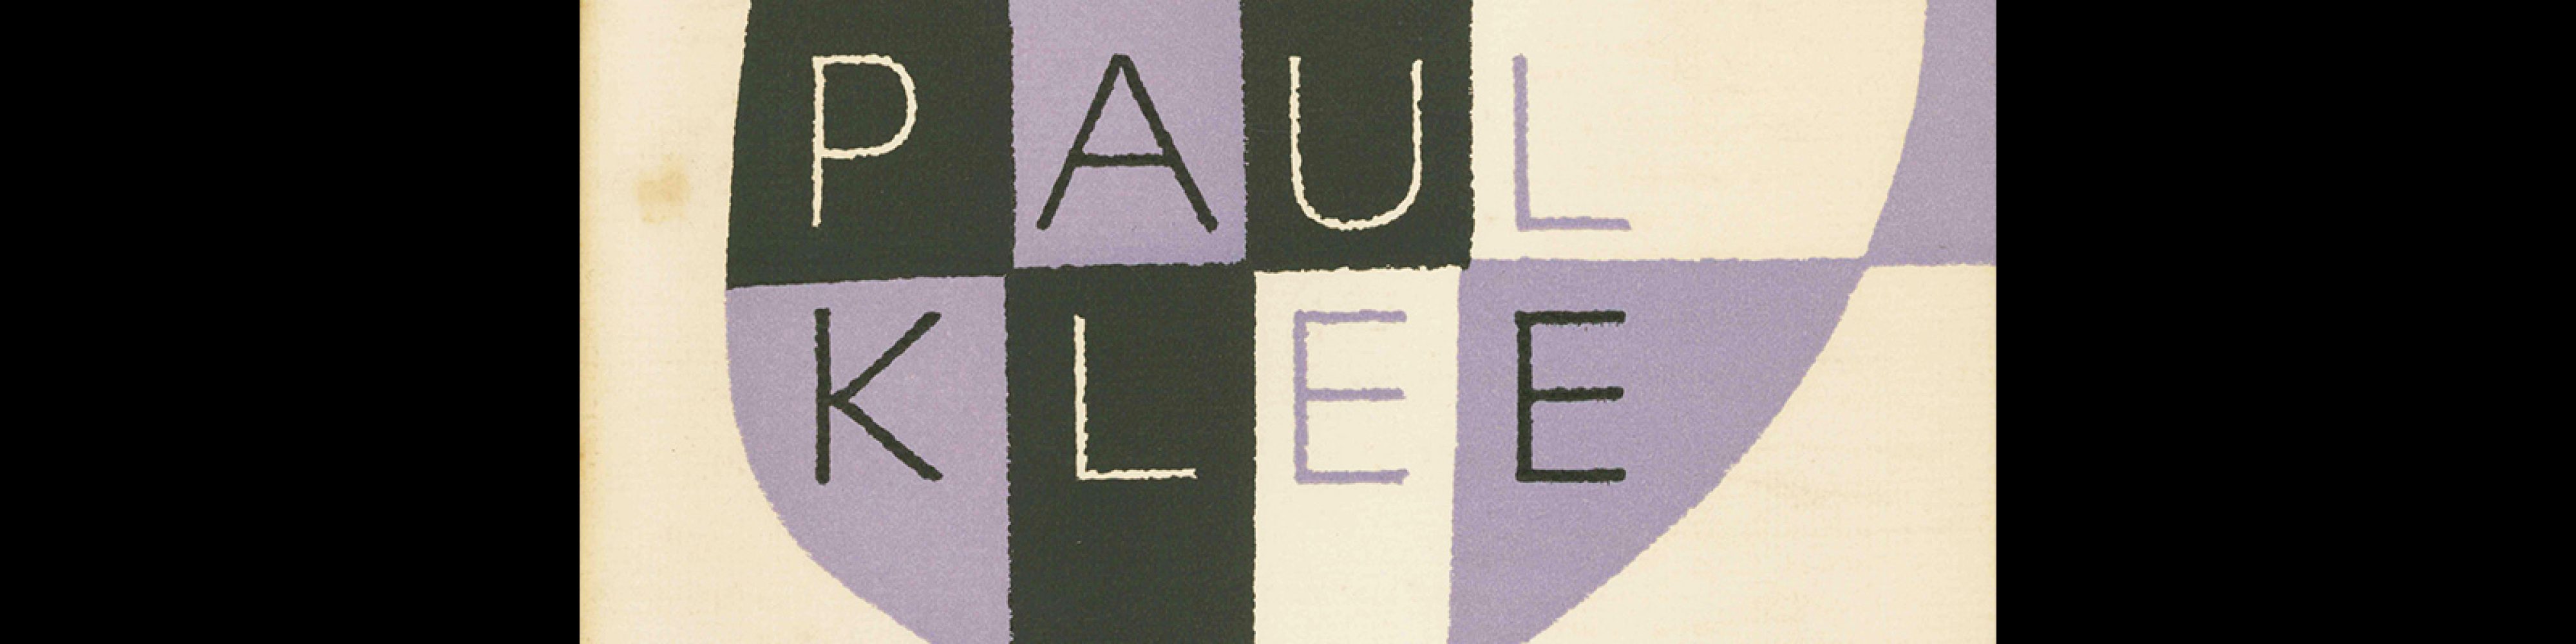 Paul Klee, The Museum of Modern Art, 1949. Designed by Paul Rand.